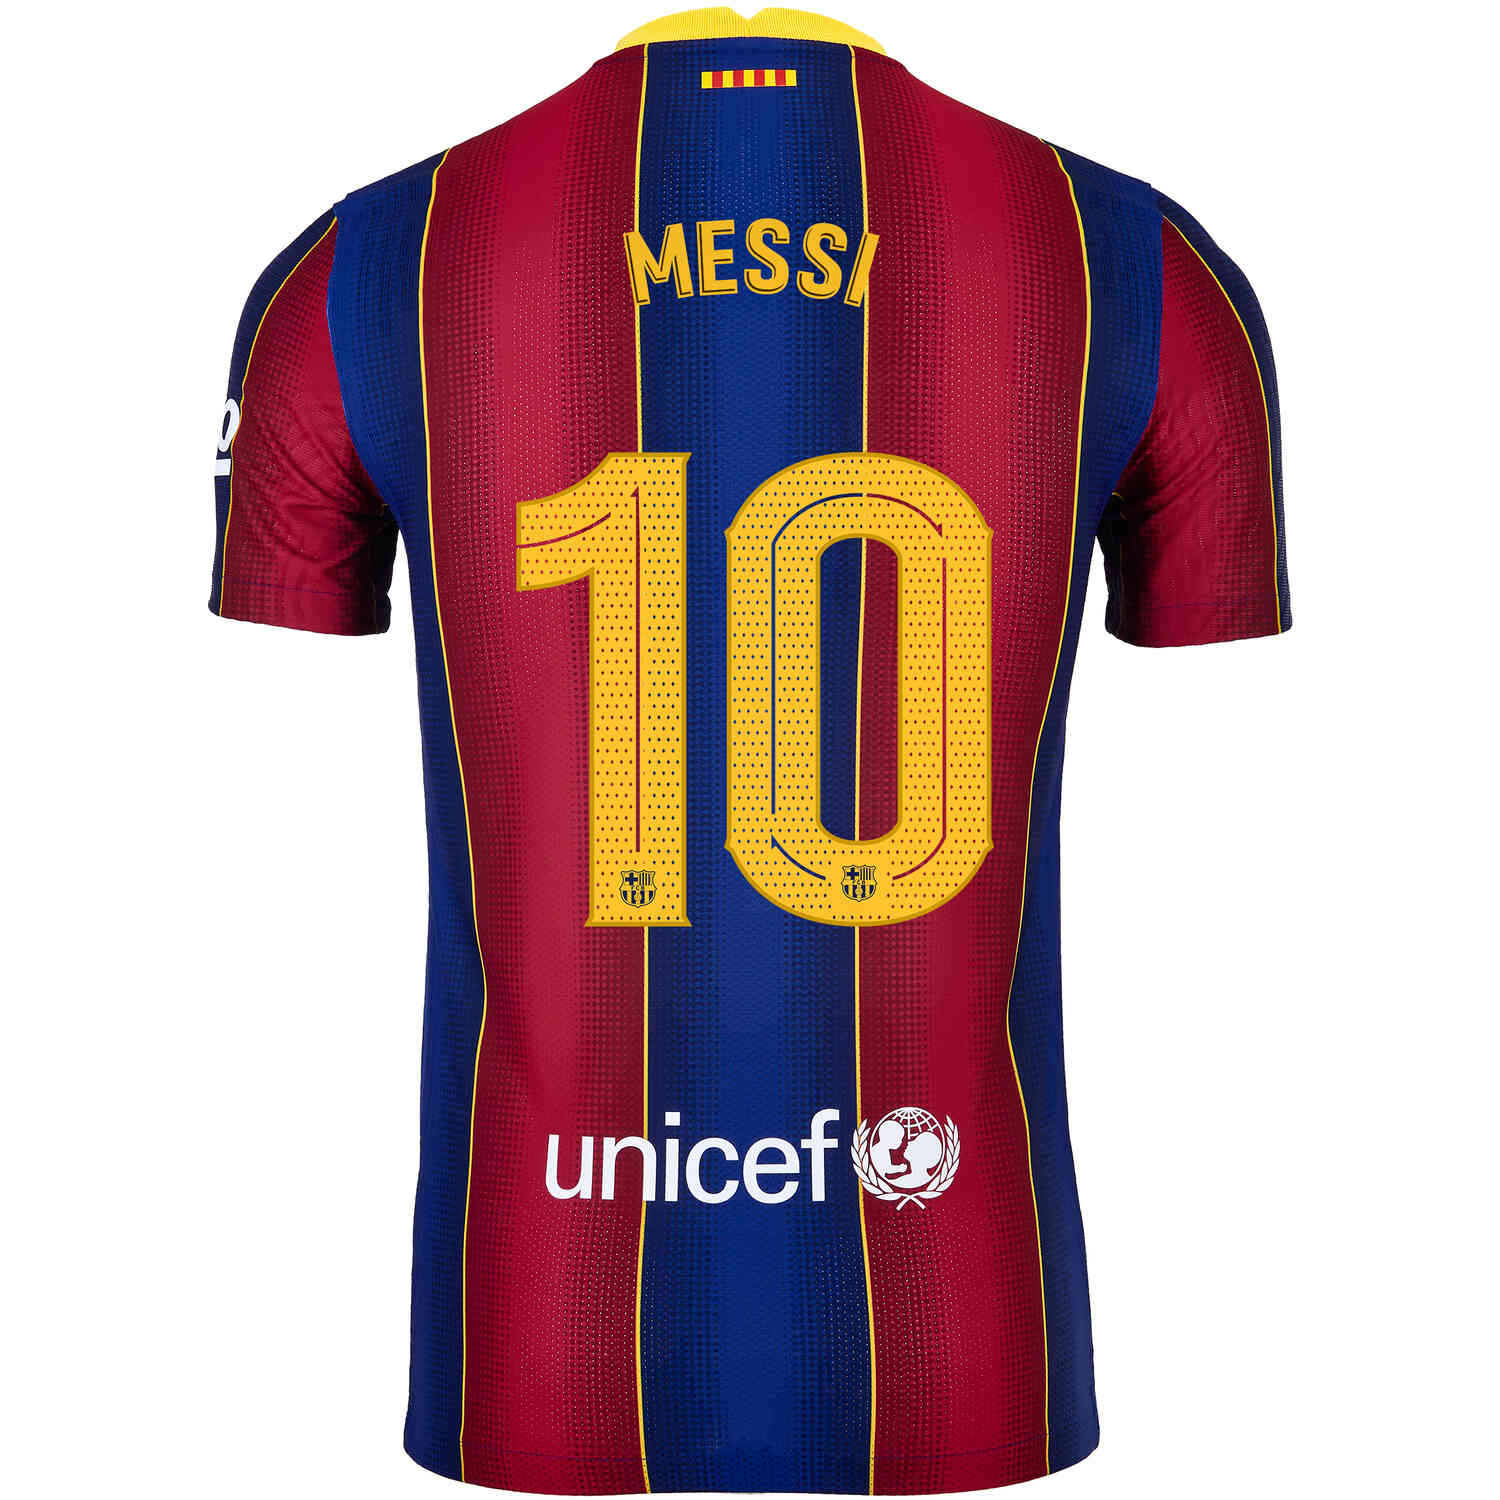 2020/21 Nike Lionel Messi Barcelona Home Match Jersey - SoccerPro